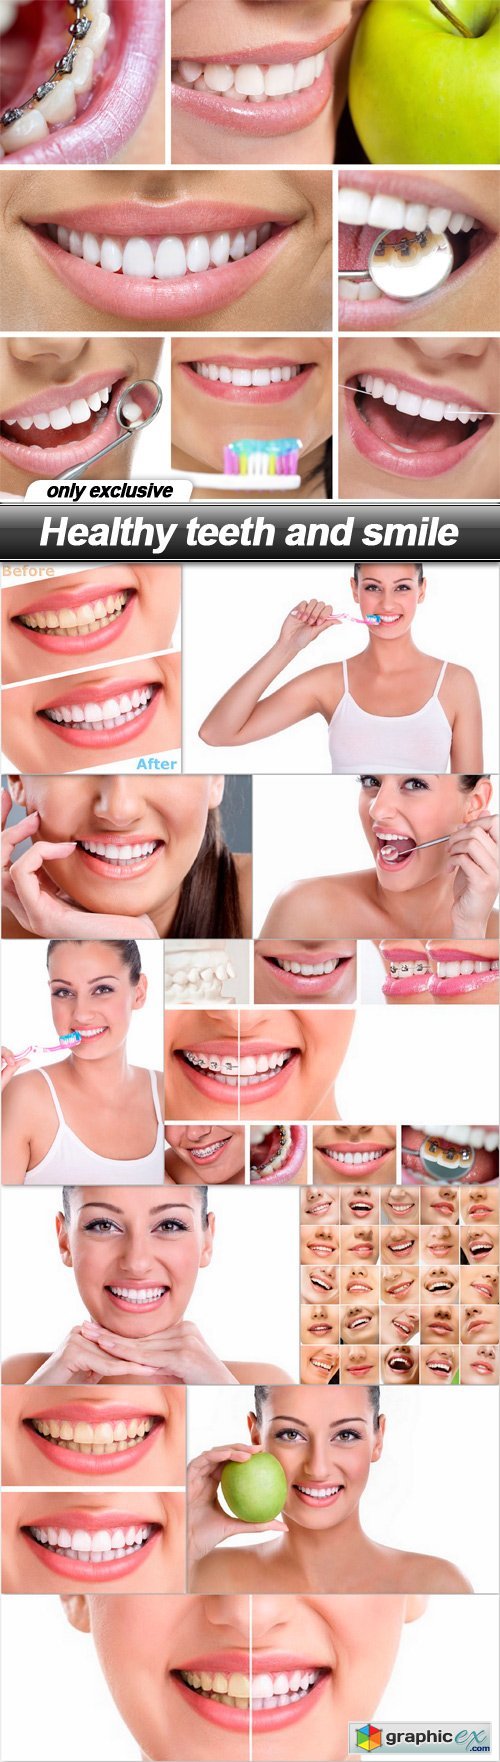 Healthy teeth and smile - 12 UHQ JPEG